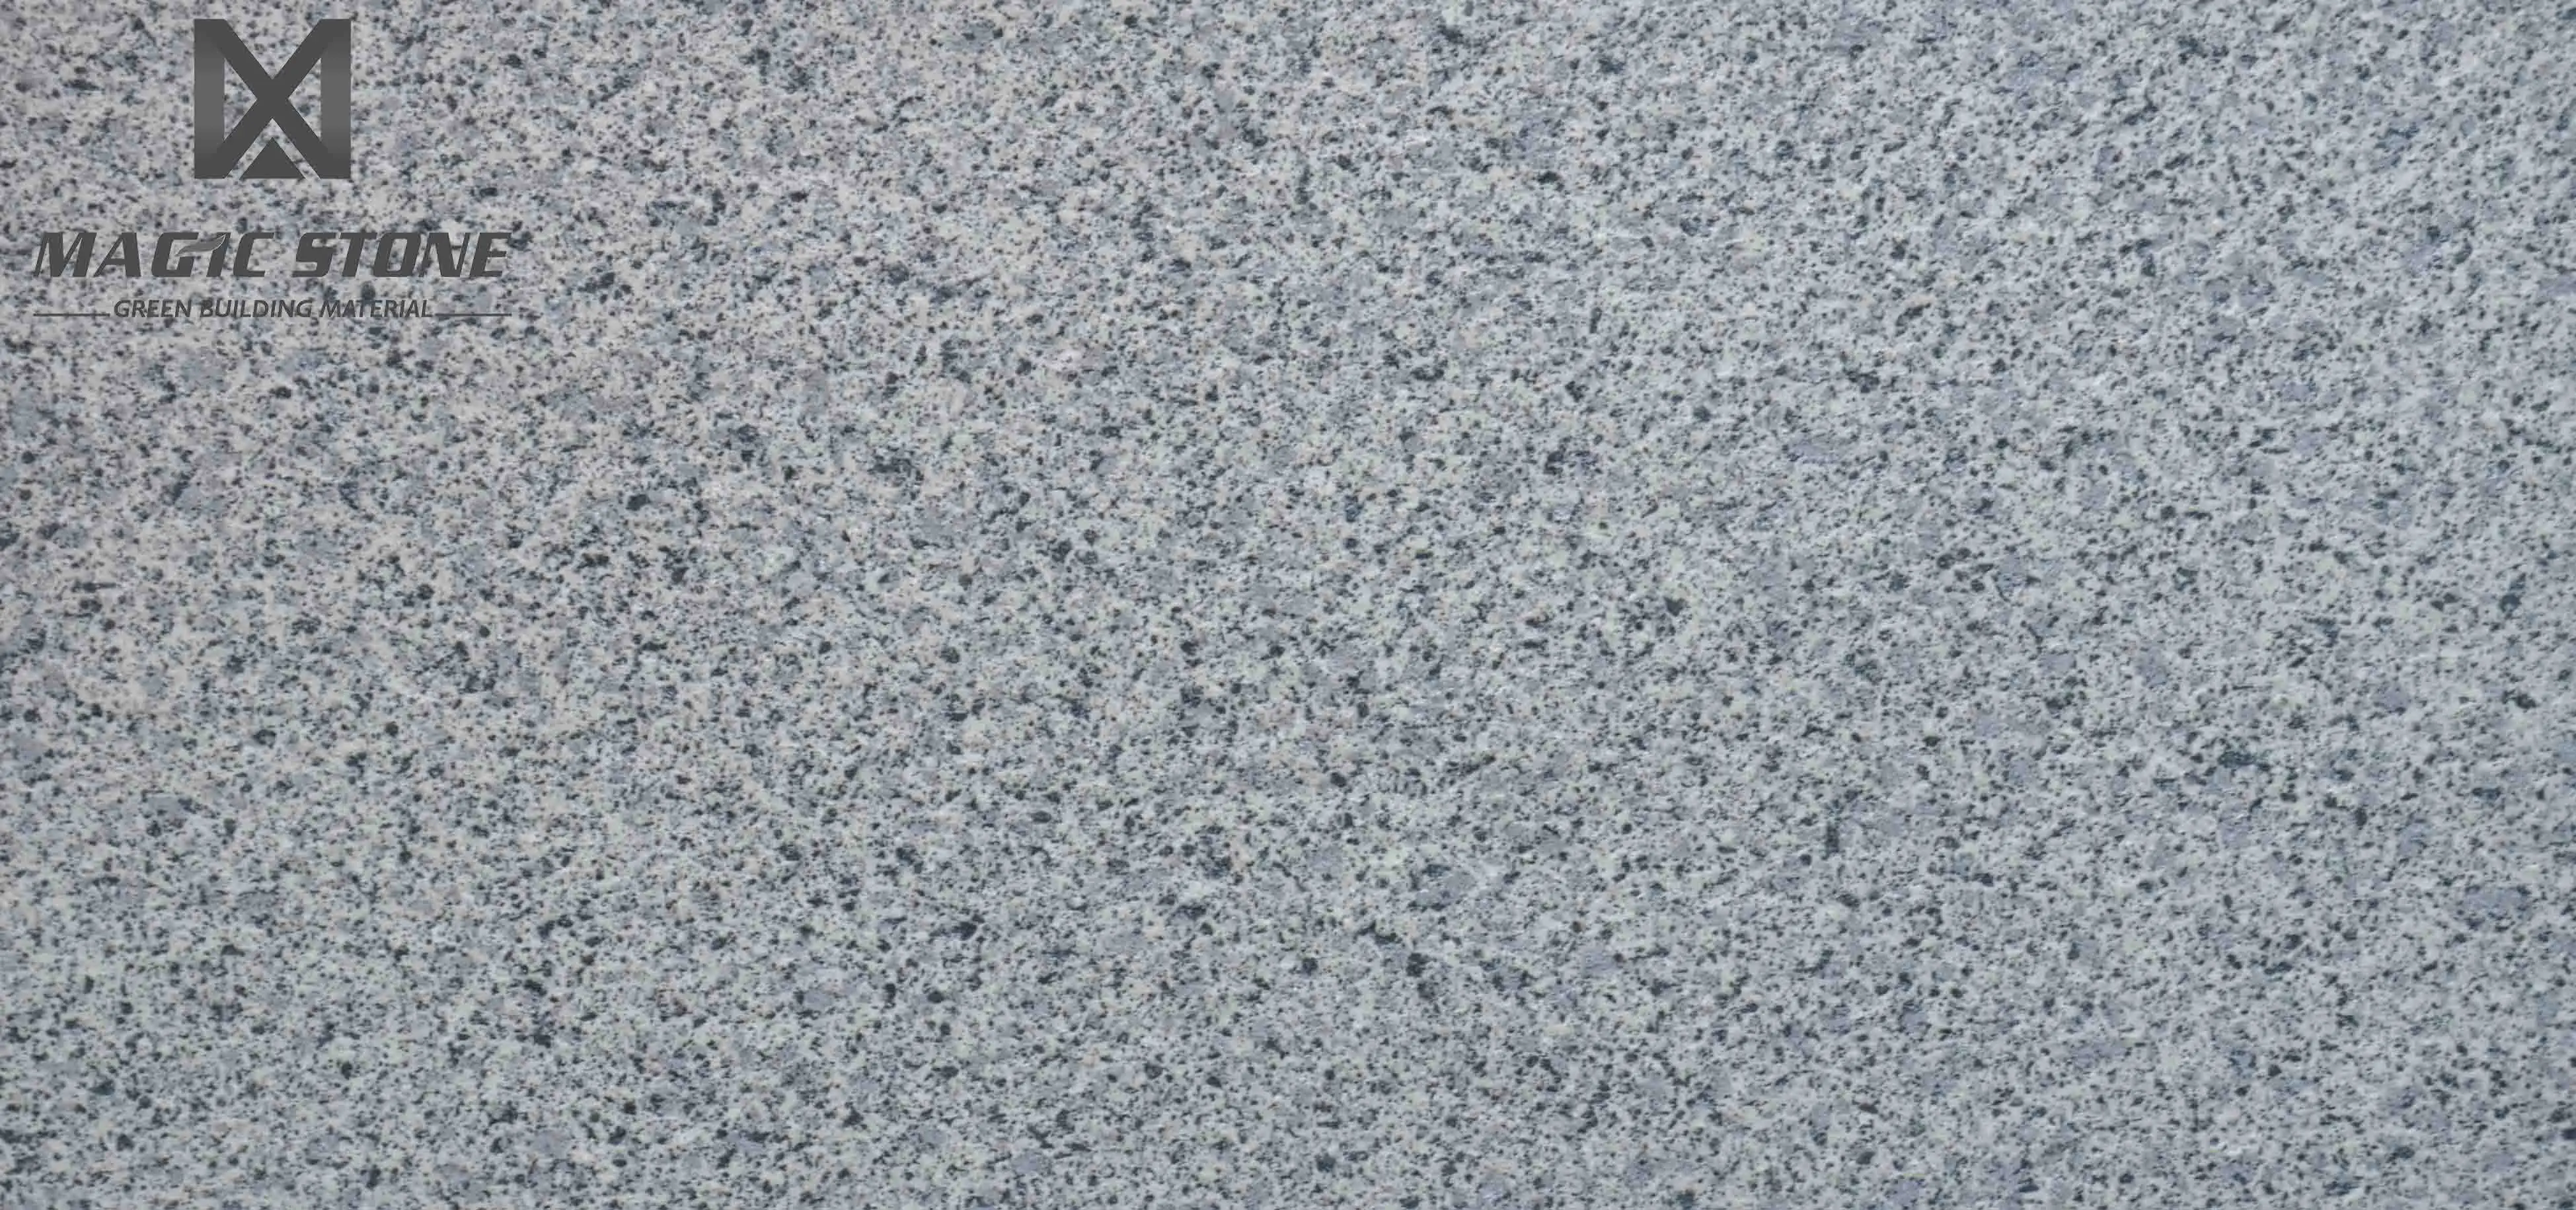 Flexible stone exterior wall cladding durable granite stone for sale